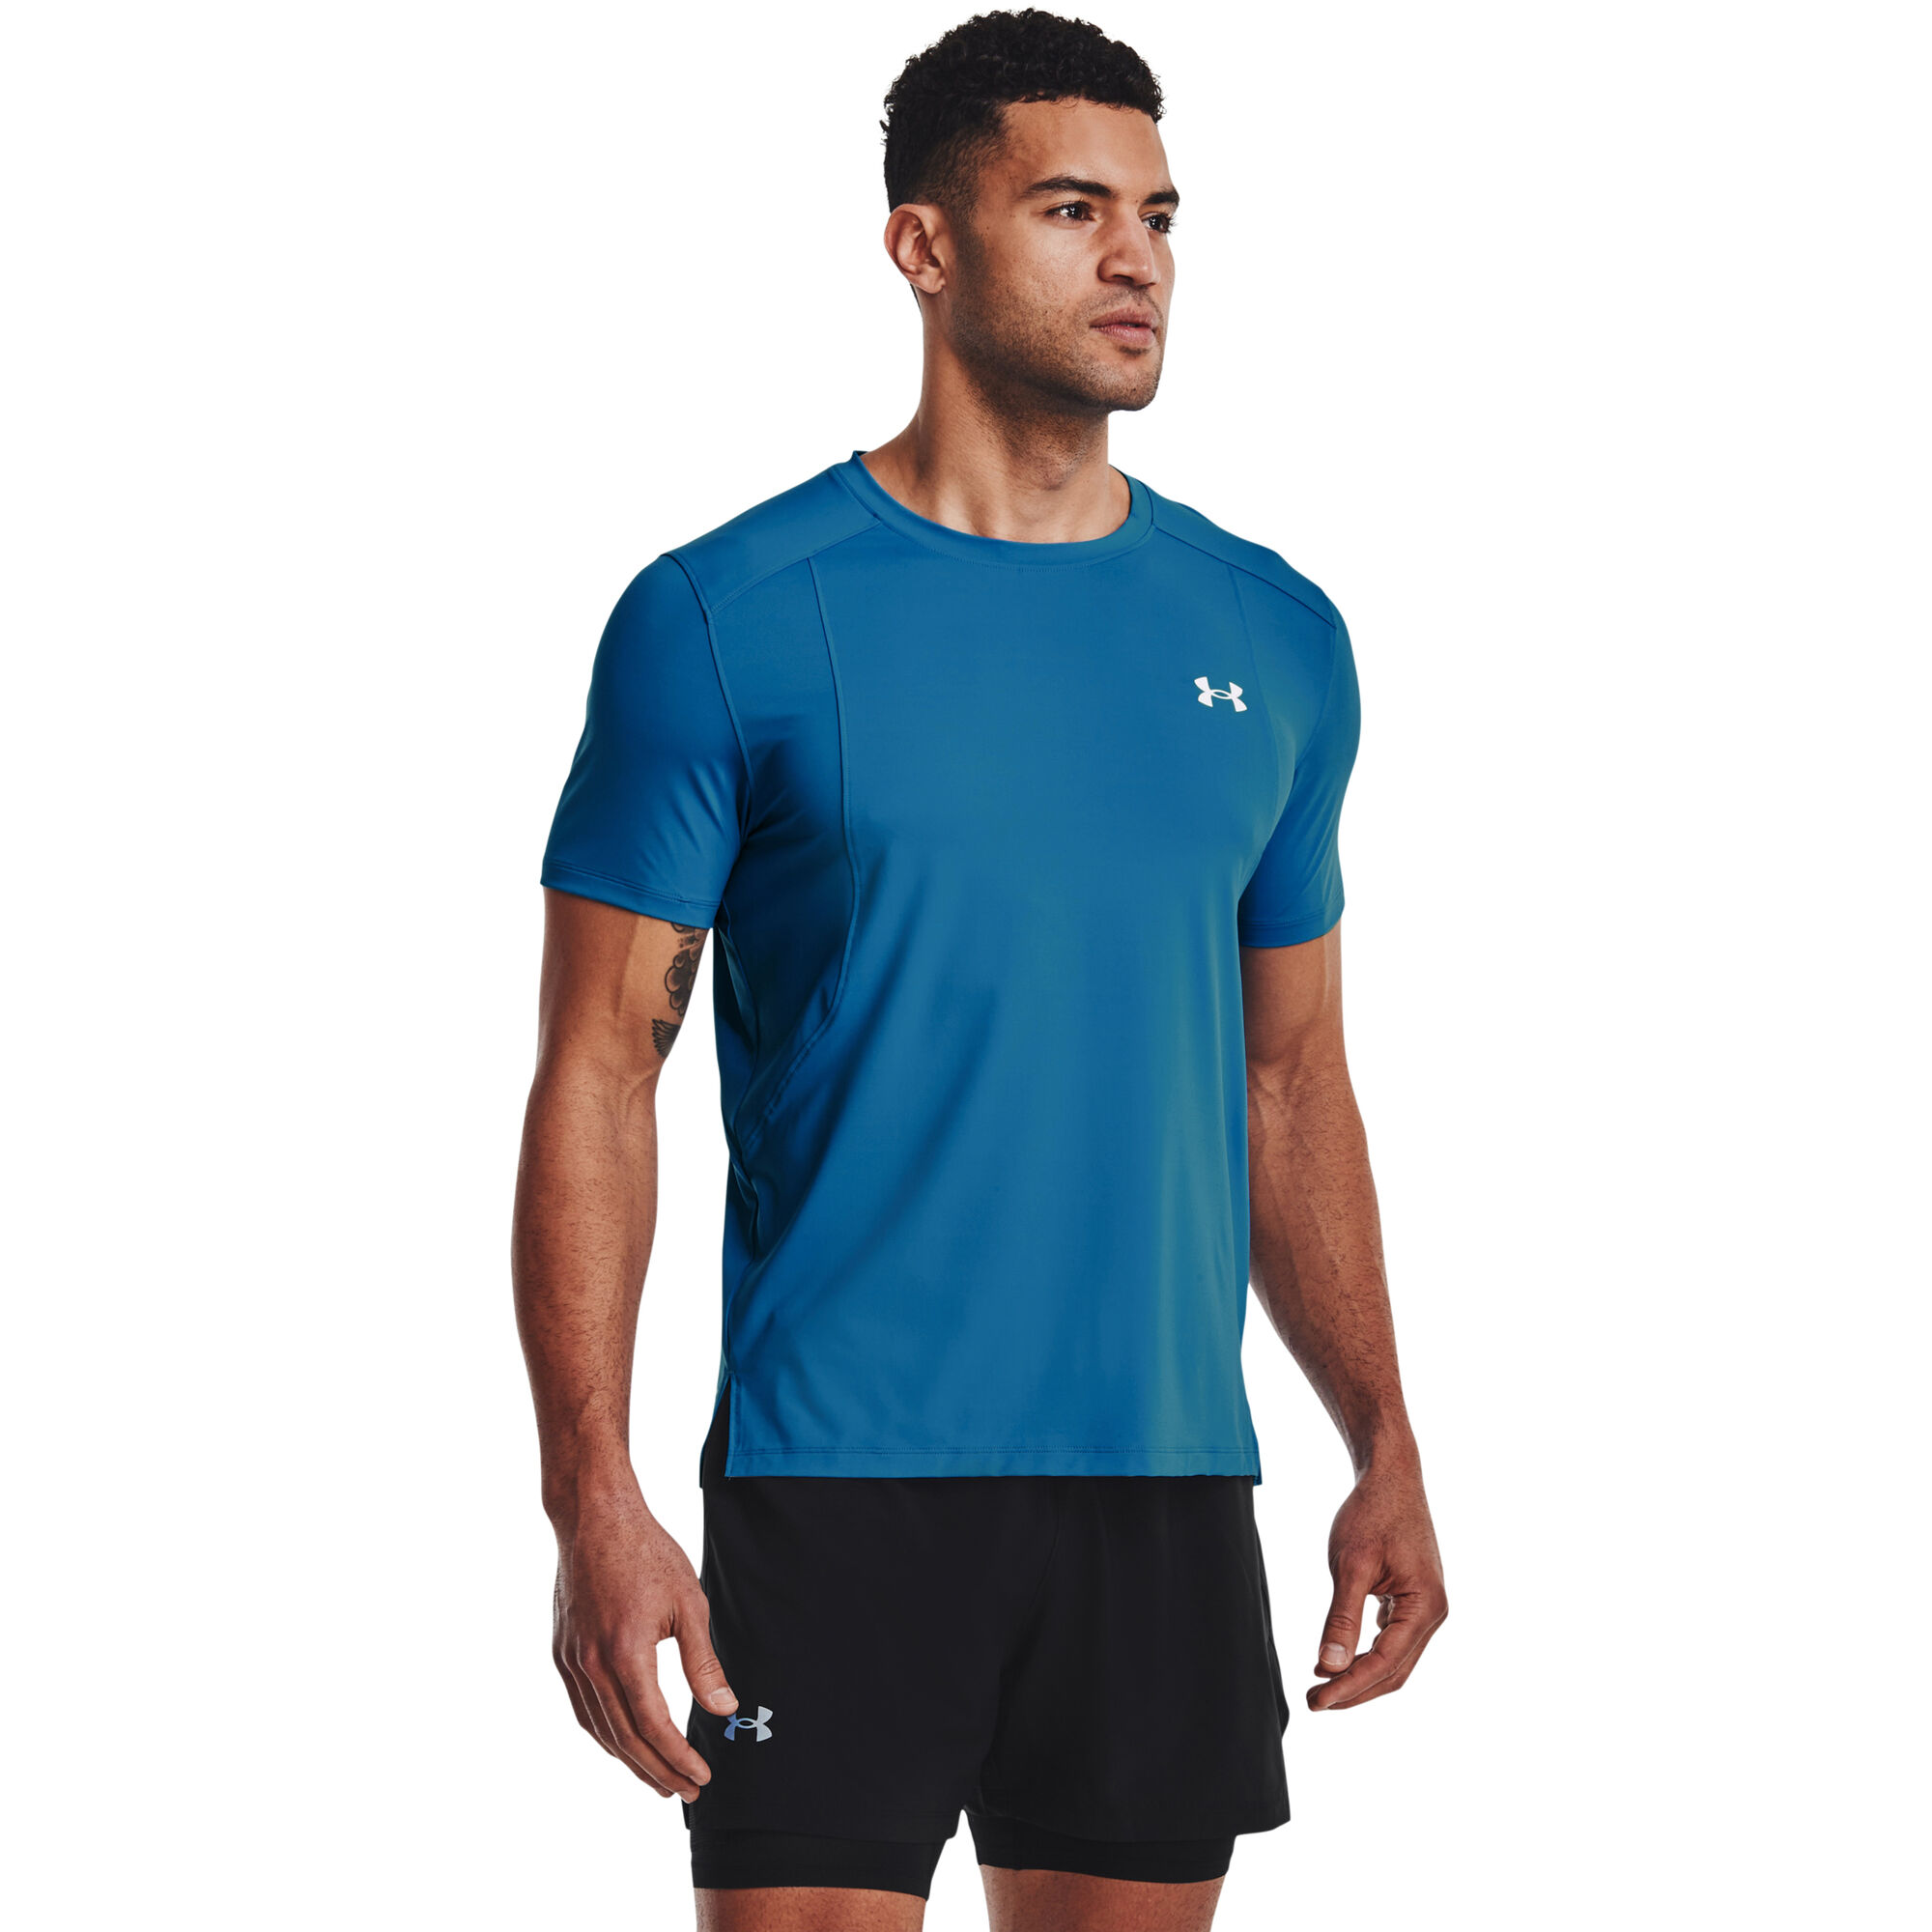 Buy Under Armour Iso-Chill Laser T-Shirt Men Blue online